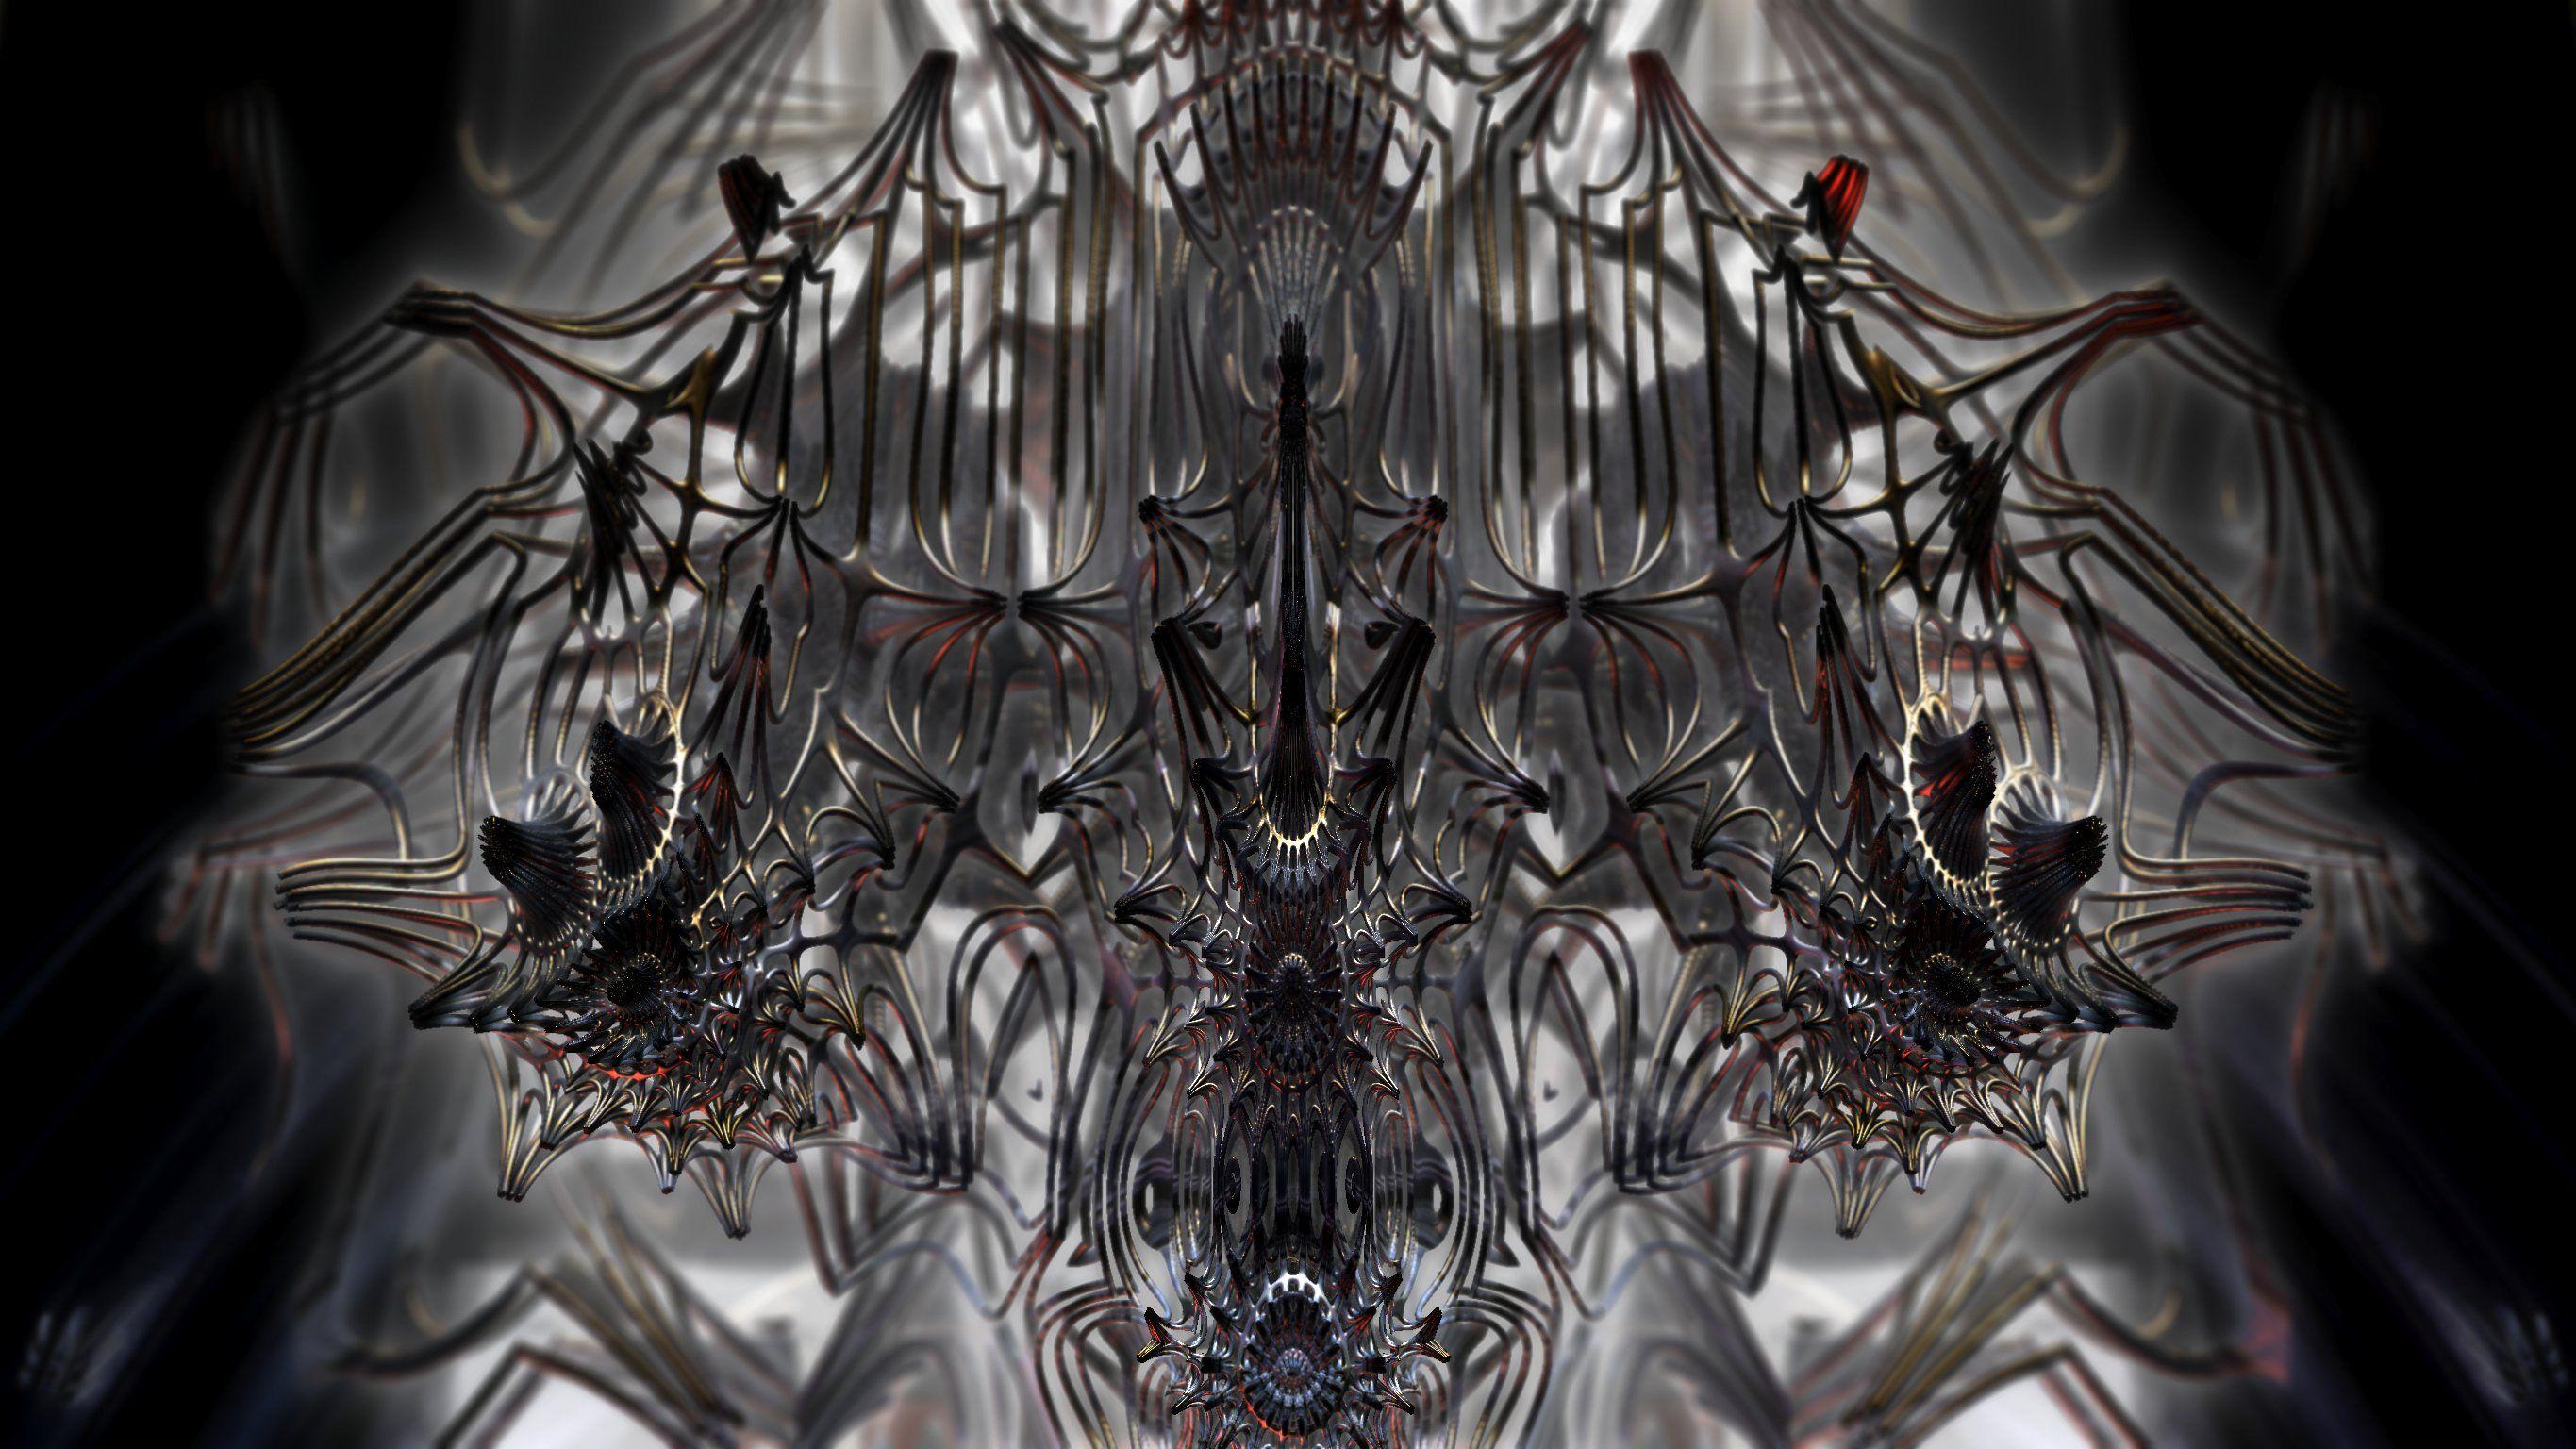 H R GIGER Art Artwork Dark Evil Artistic Horror Fantasy Sci Fi Alien